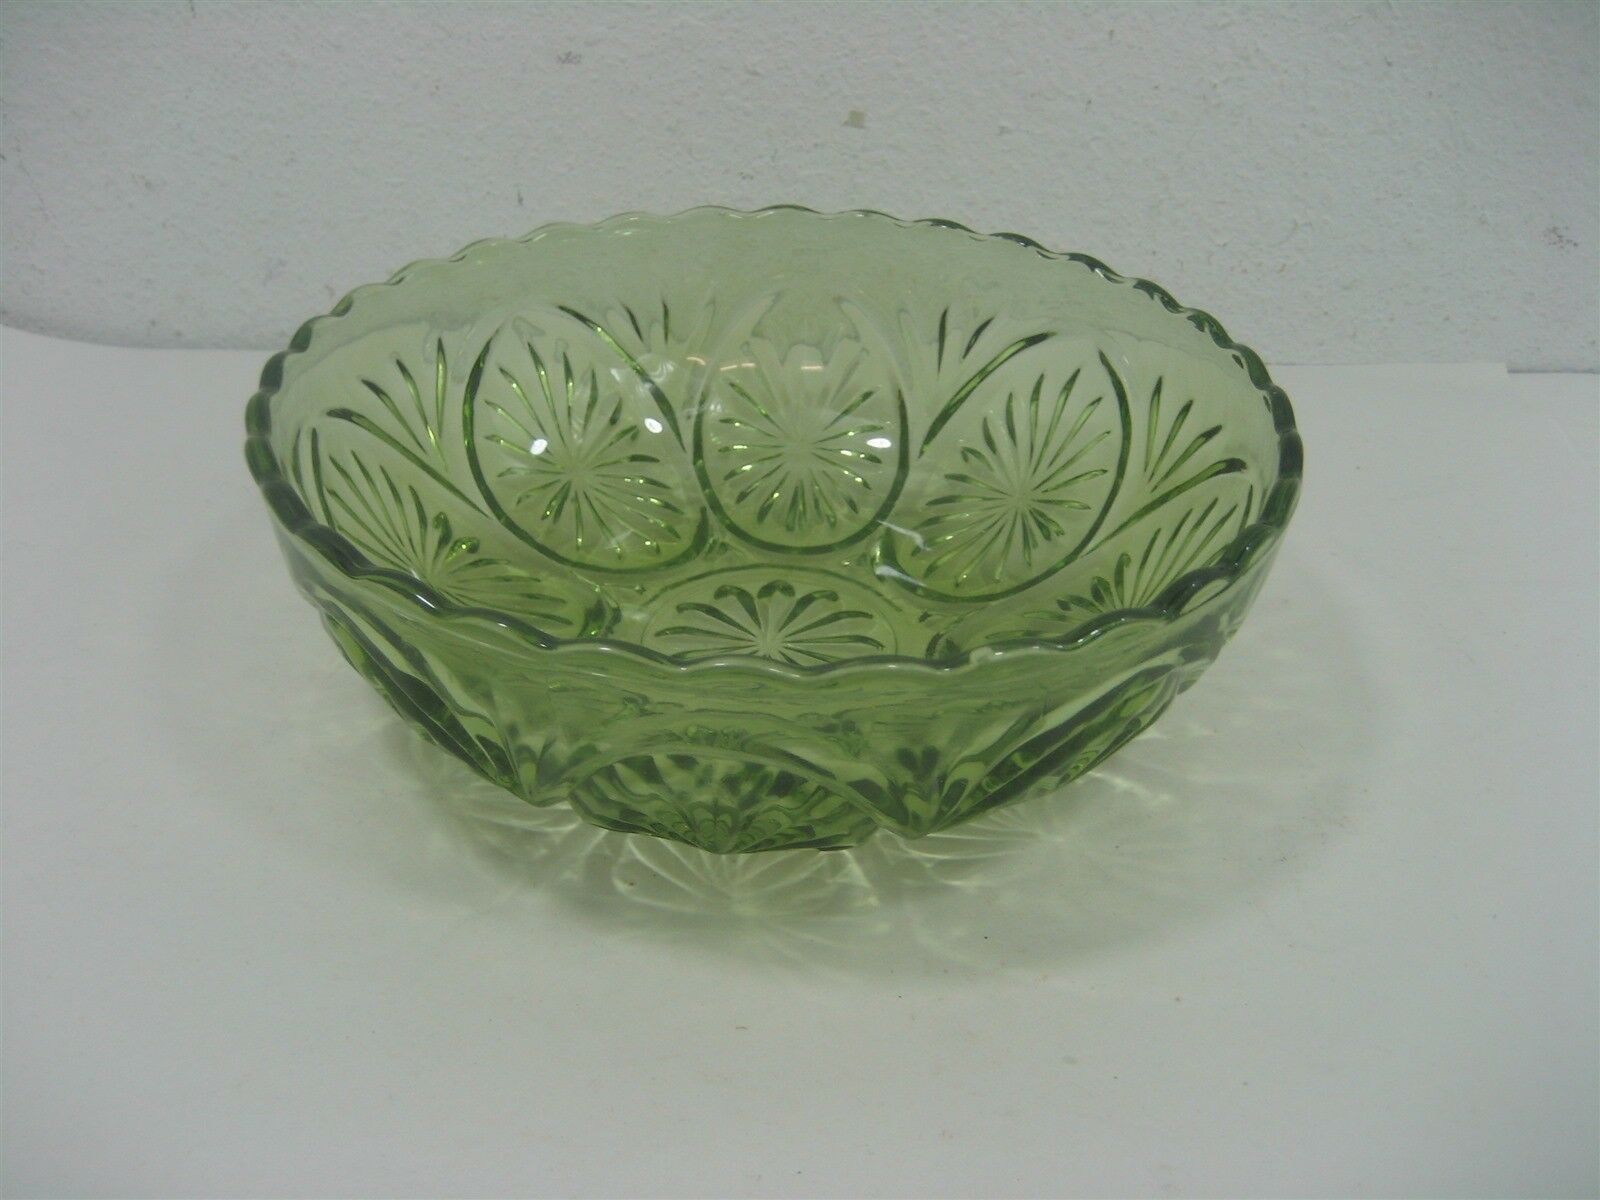 Vintage Hazel Atlas Green Glass Serving Bowl Dish Display with Etched Detailing - $11.26